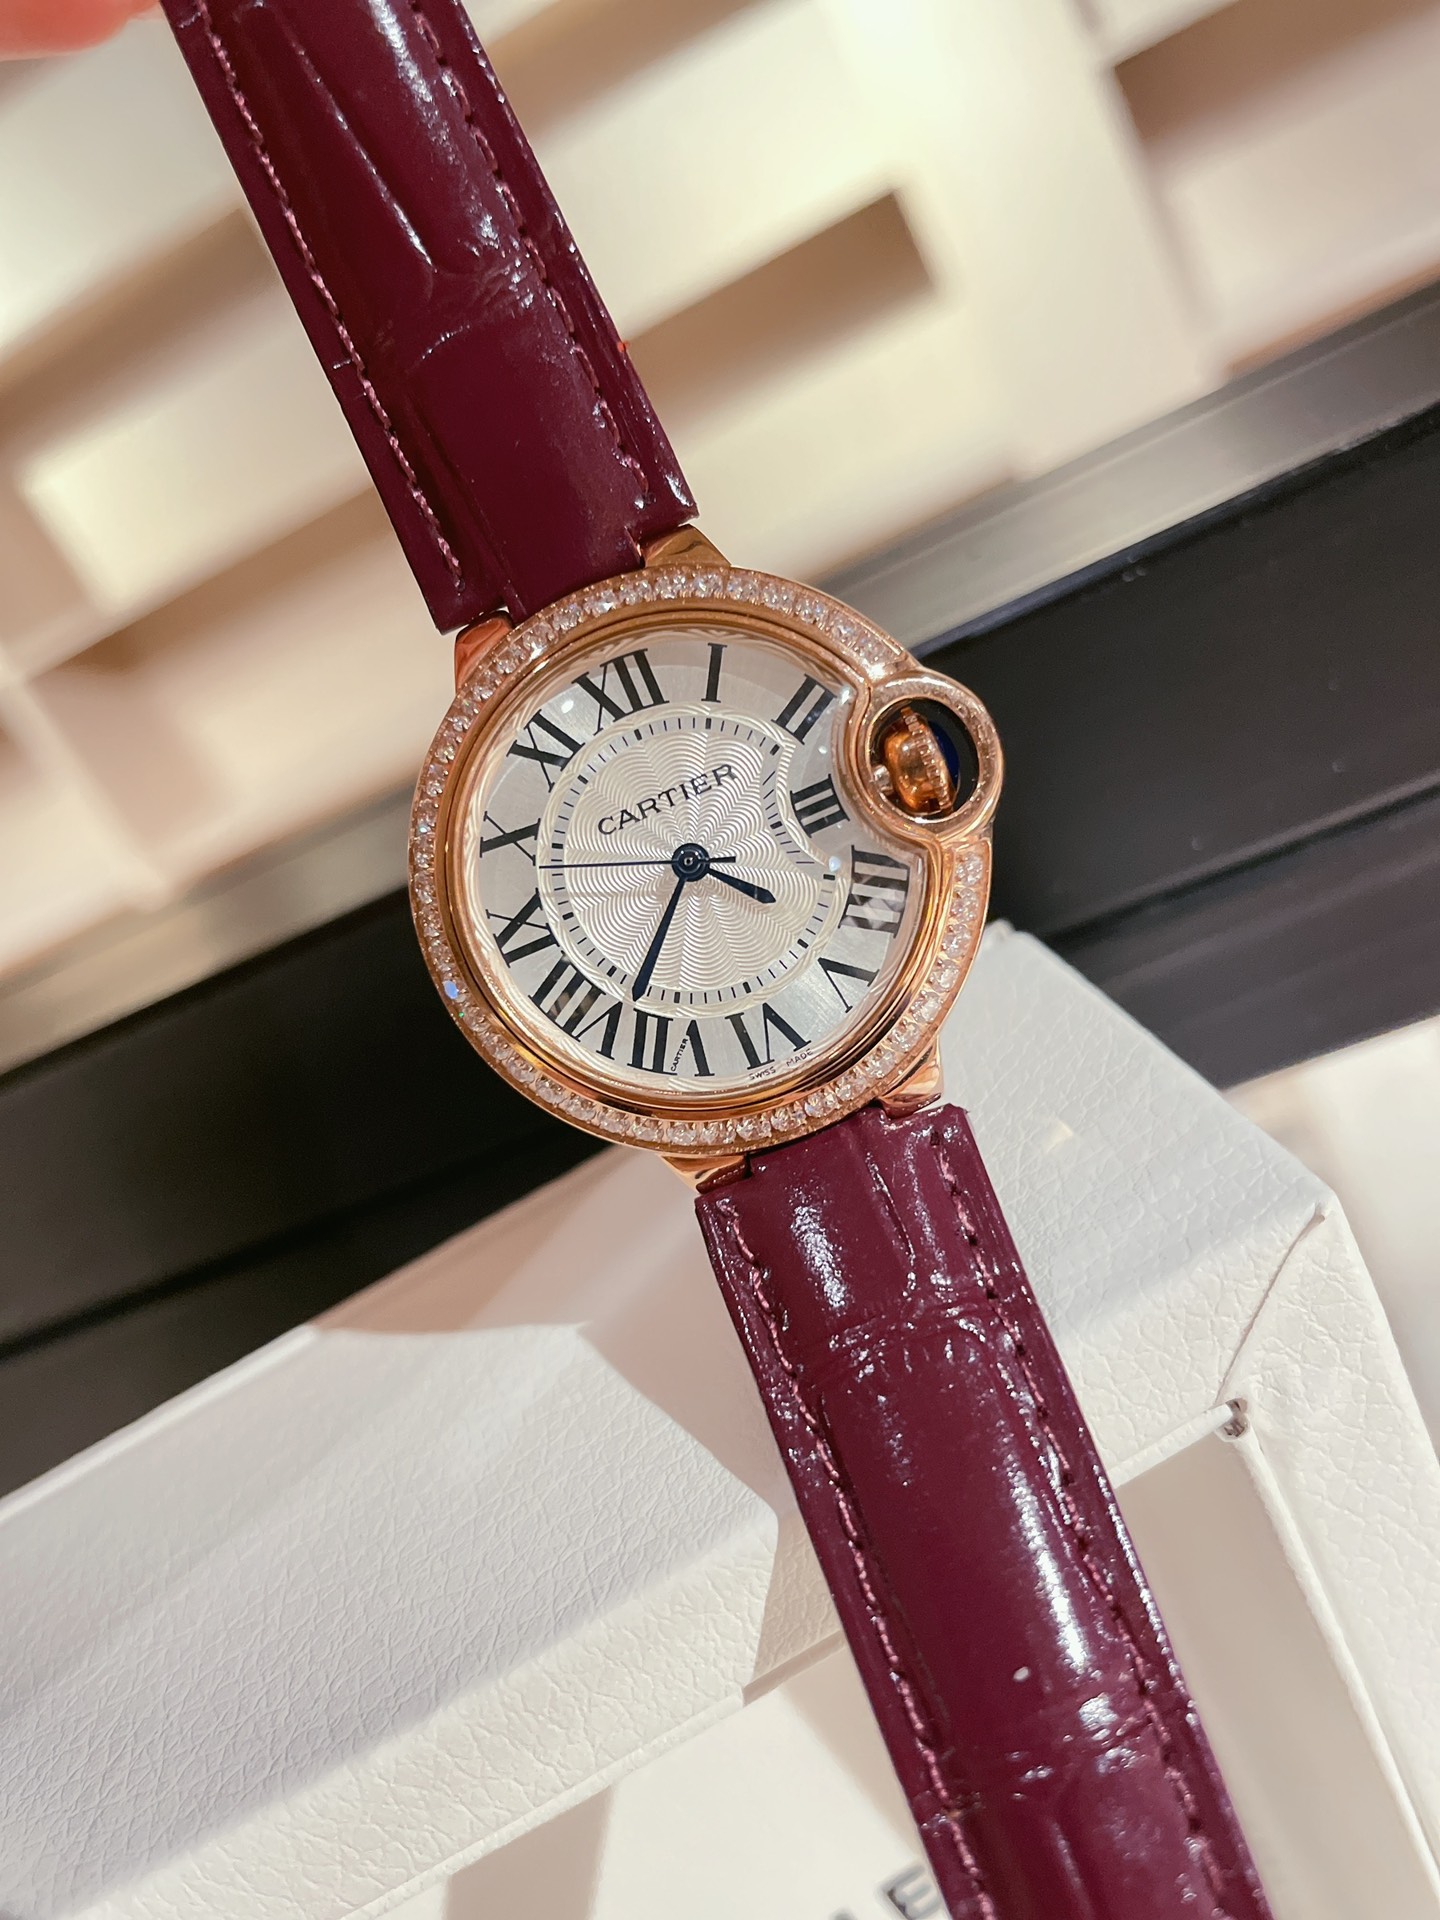 CARTIERカルティエ マレーシアｎ級品 フランス 薄い腕時計 丸い形 レザー 新商品 限定品 レッド_4